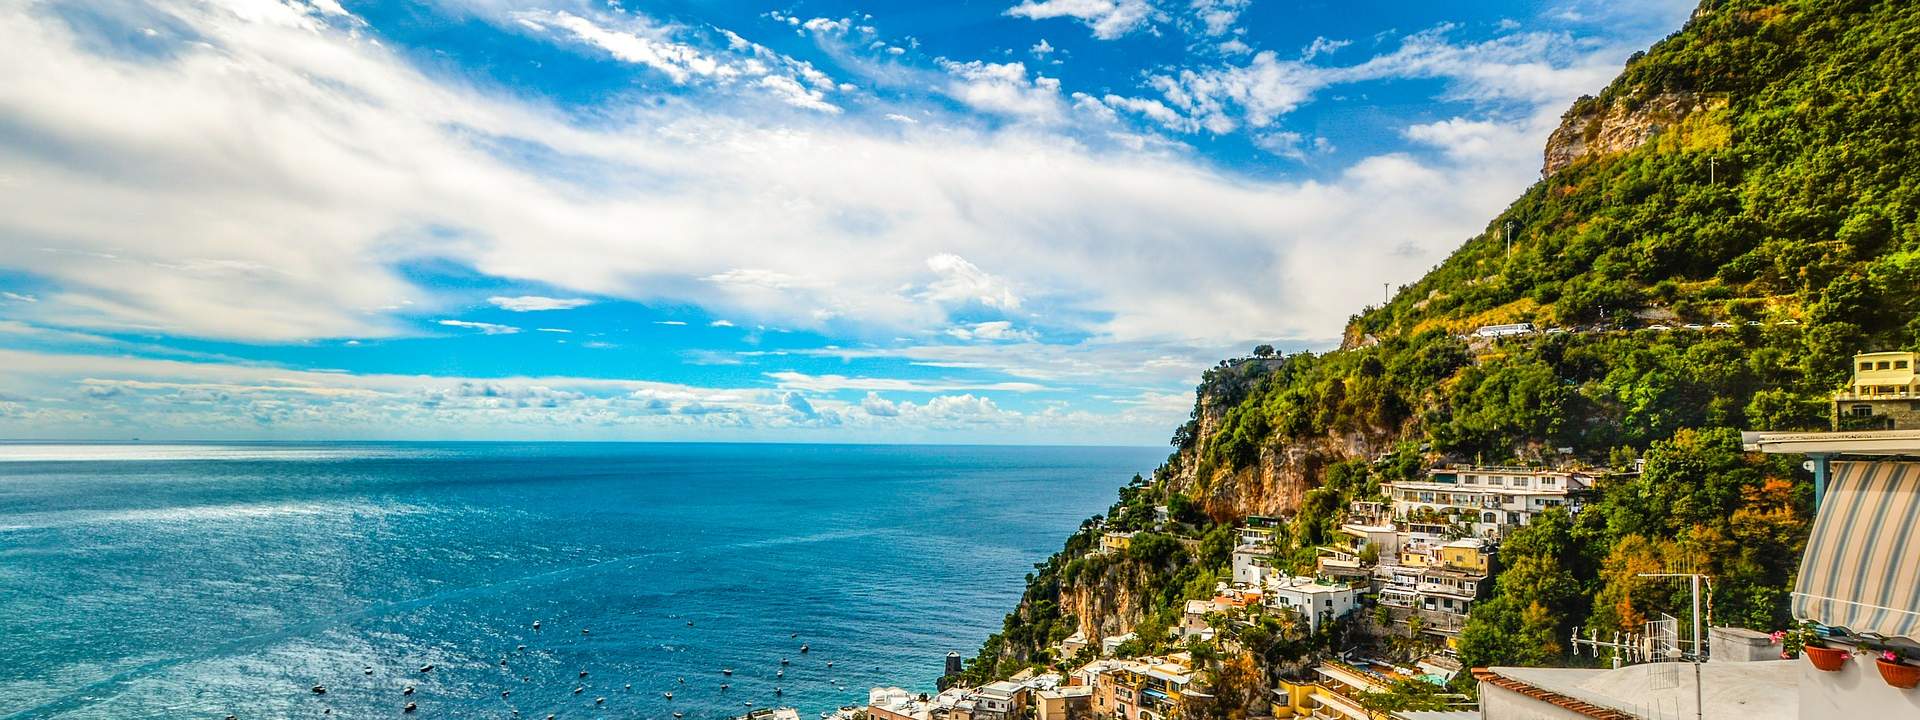 Navega desde Nápoles hasta la costa de Almafitan a través de Capri